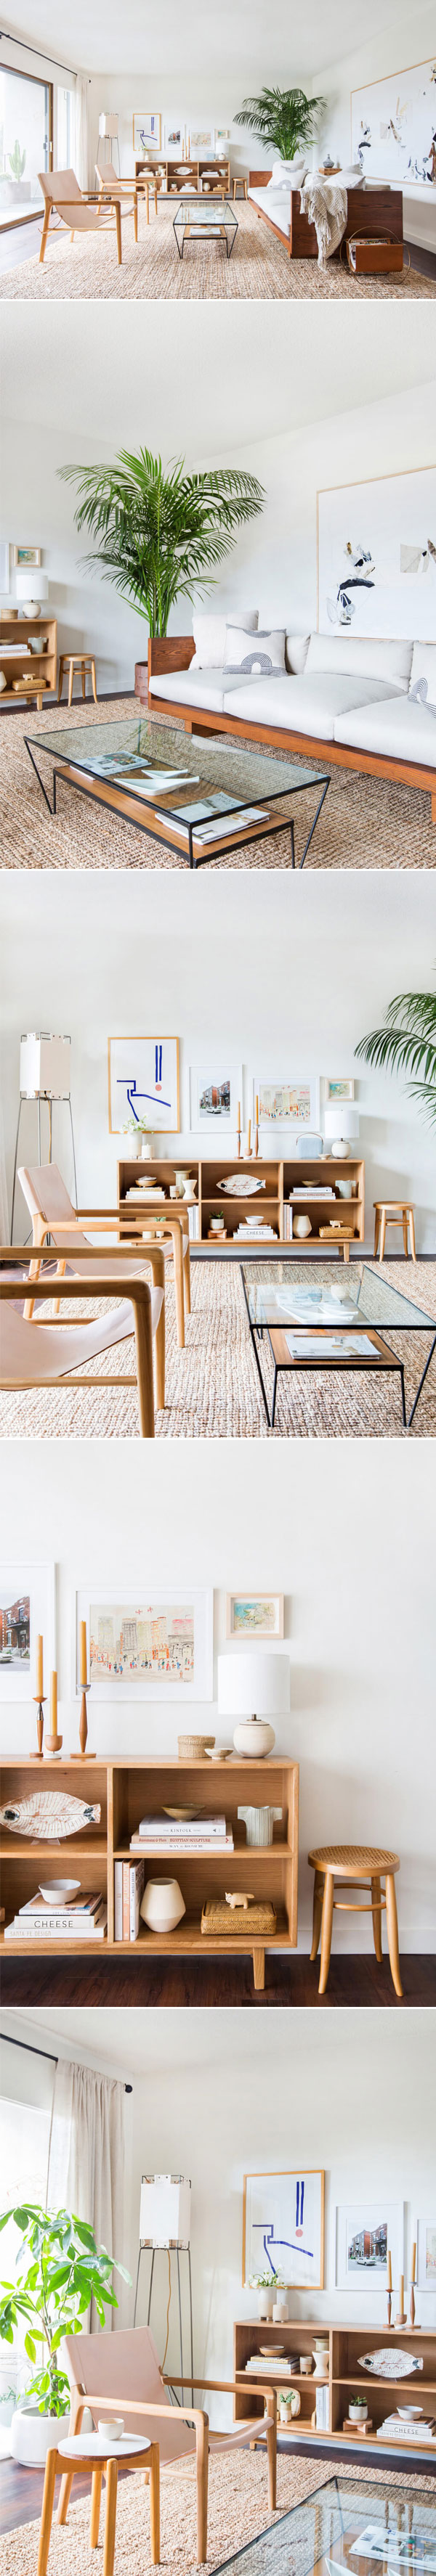 Uma sala minimal e aconchegante | Melanie from Emily Henderson Design